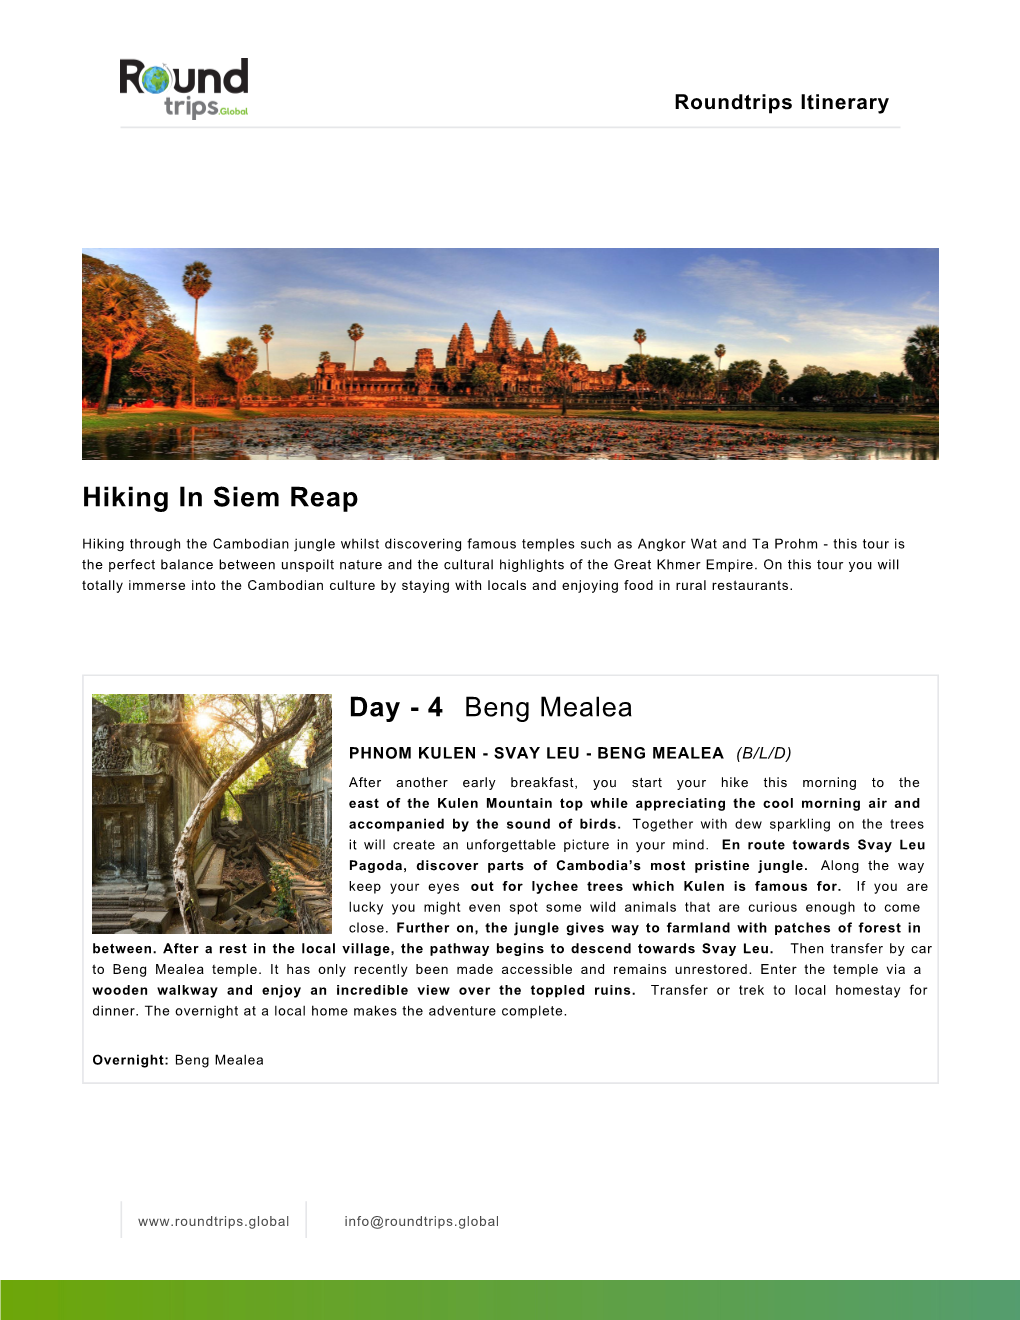 Hiking in Siem Reap